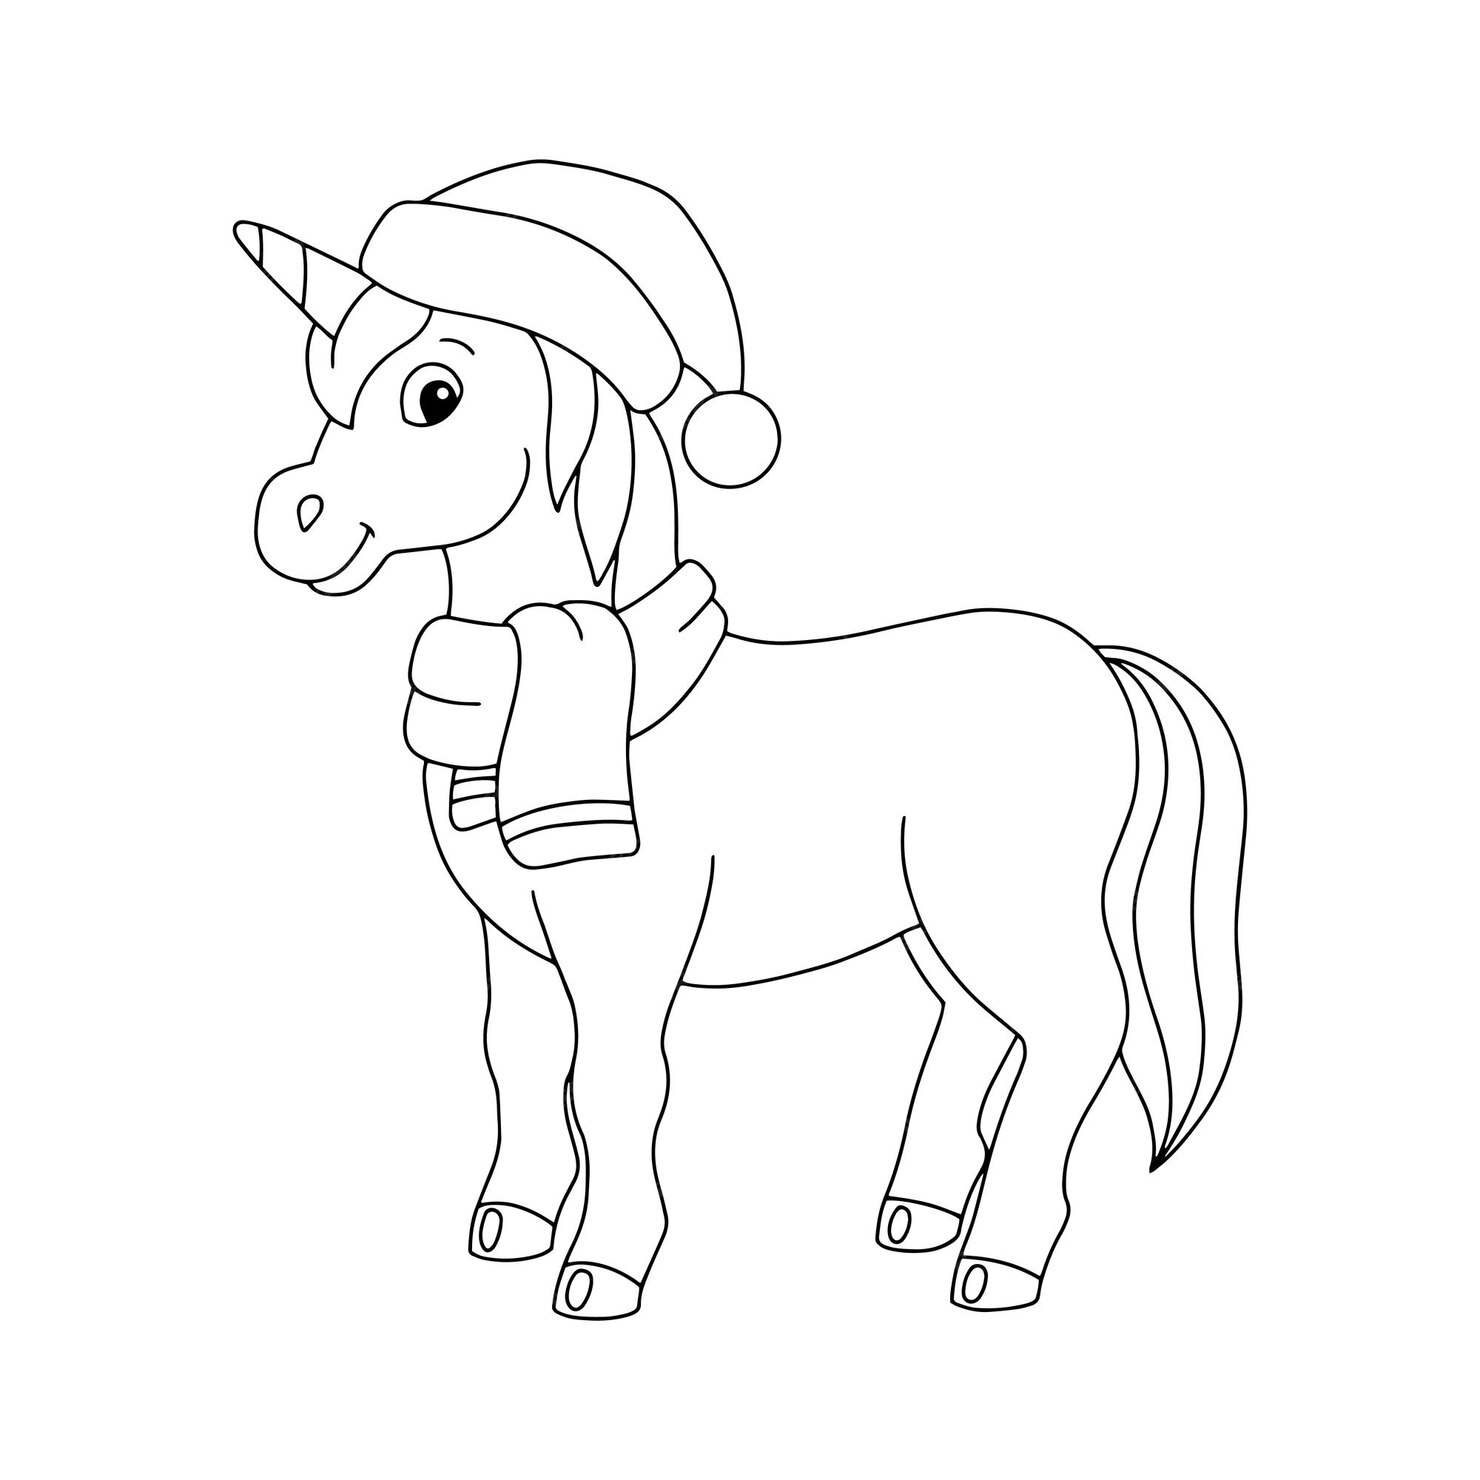 Premium Vector | Magic fairy unicorn cute horse coloring book page for kids